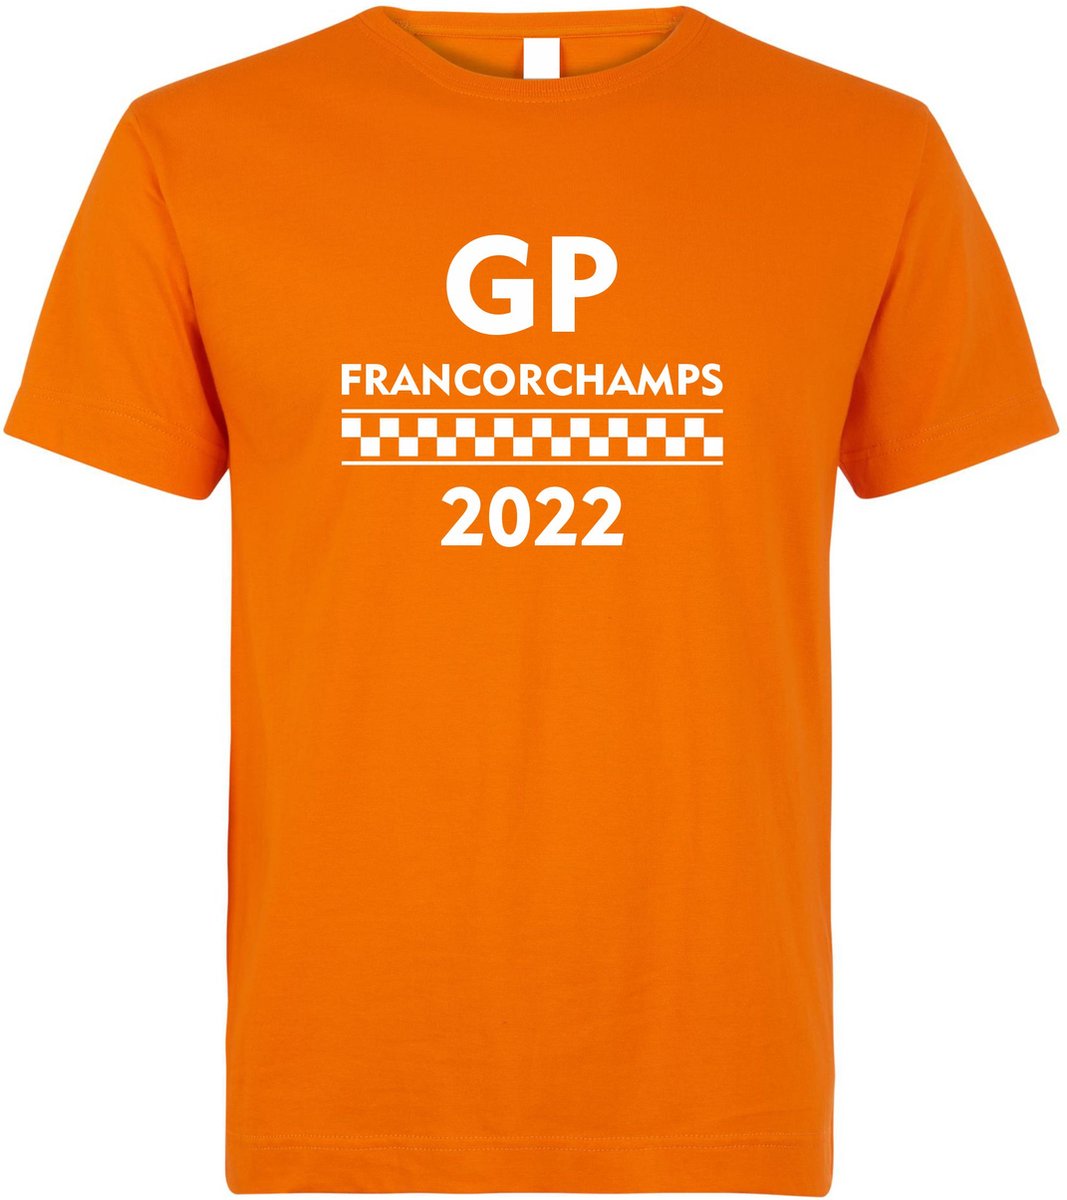 T-shirt kinderen GP Francorchamps 2022 | Max Verstappen / Red Bull Racing / Formule 1 fan | Grand Prix Circuit Spa-Francorchamps | kleding shirt | Oranje | maat 80